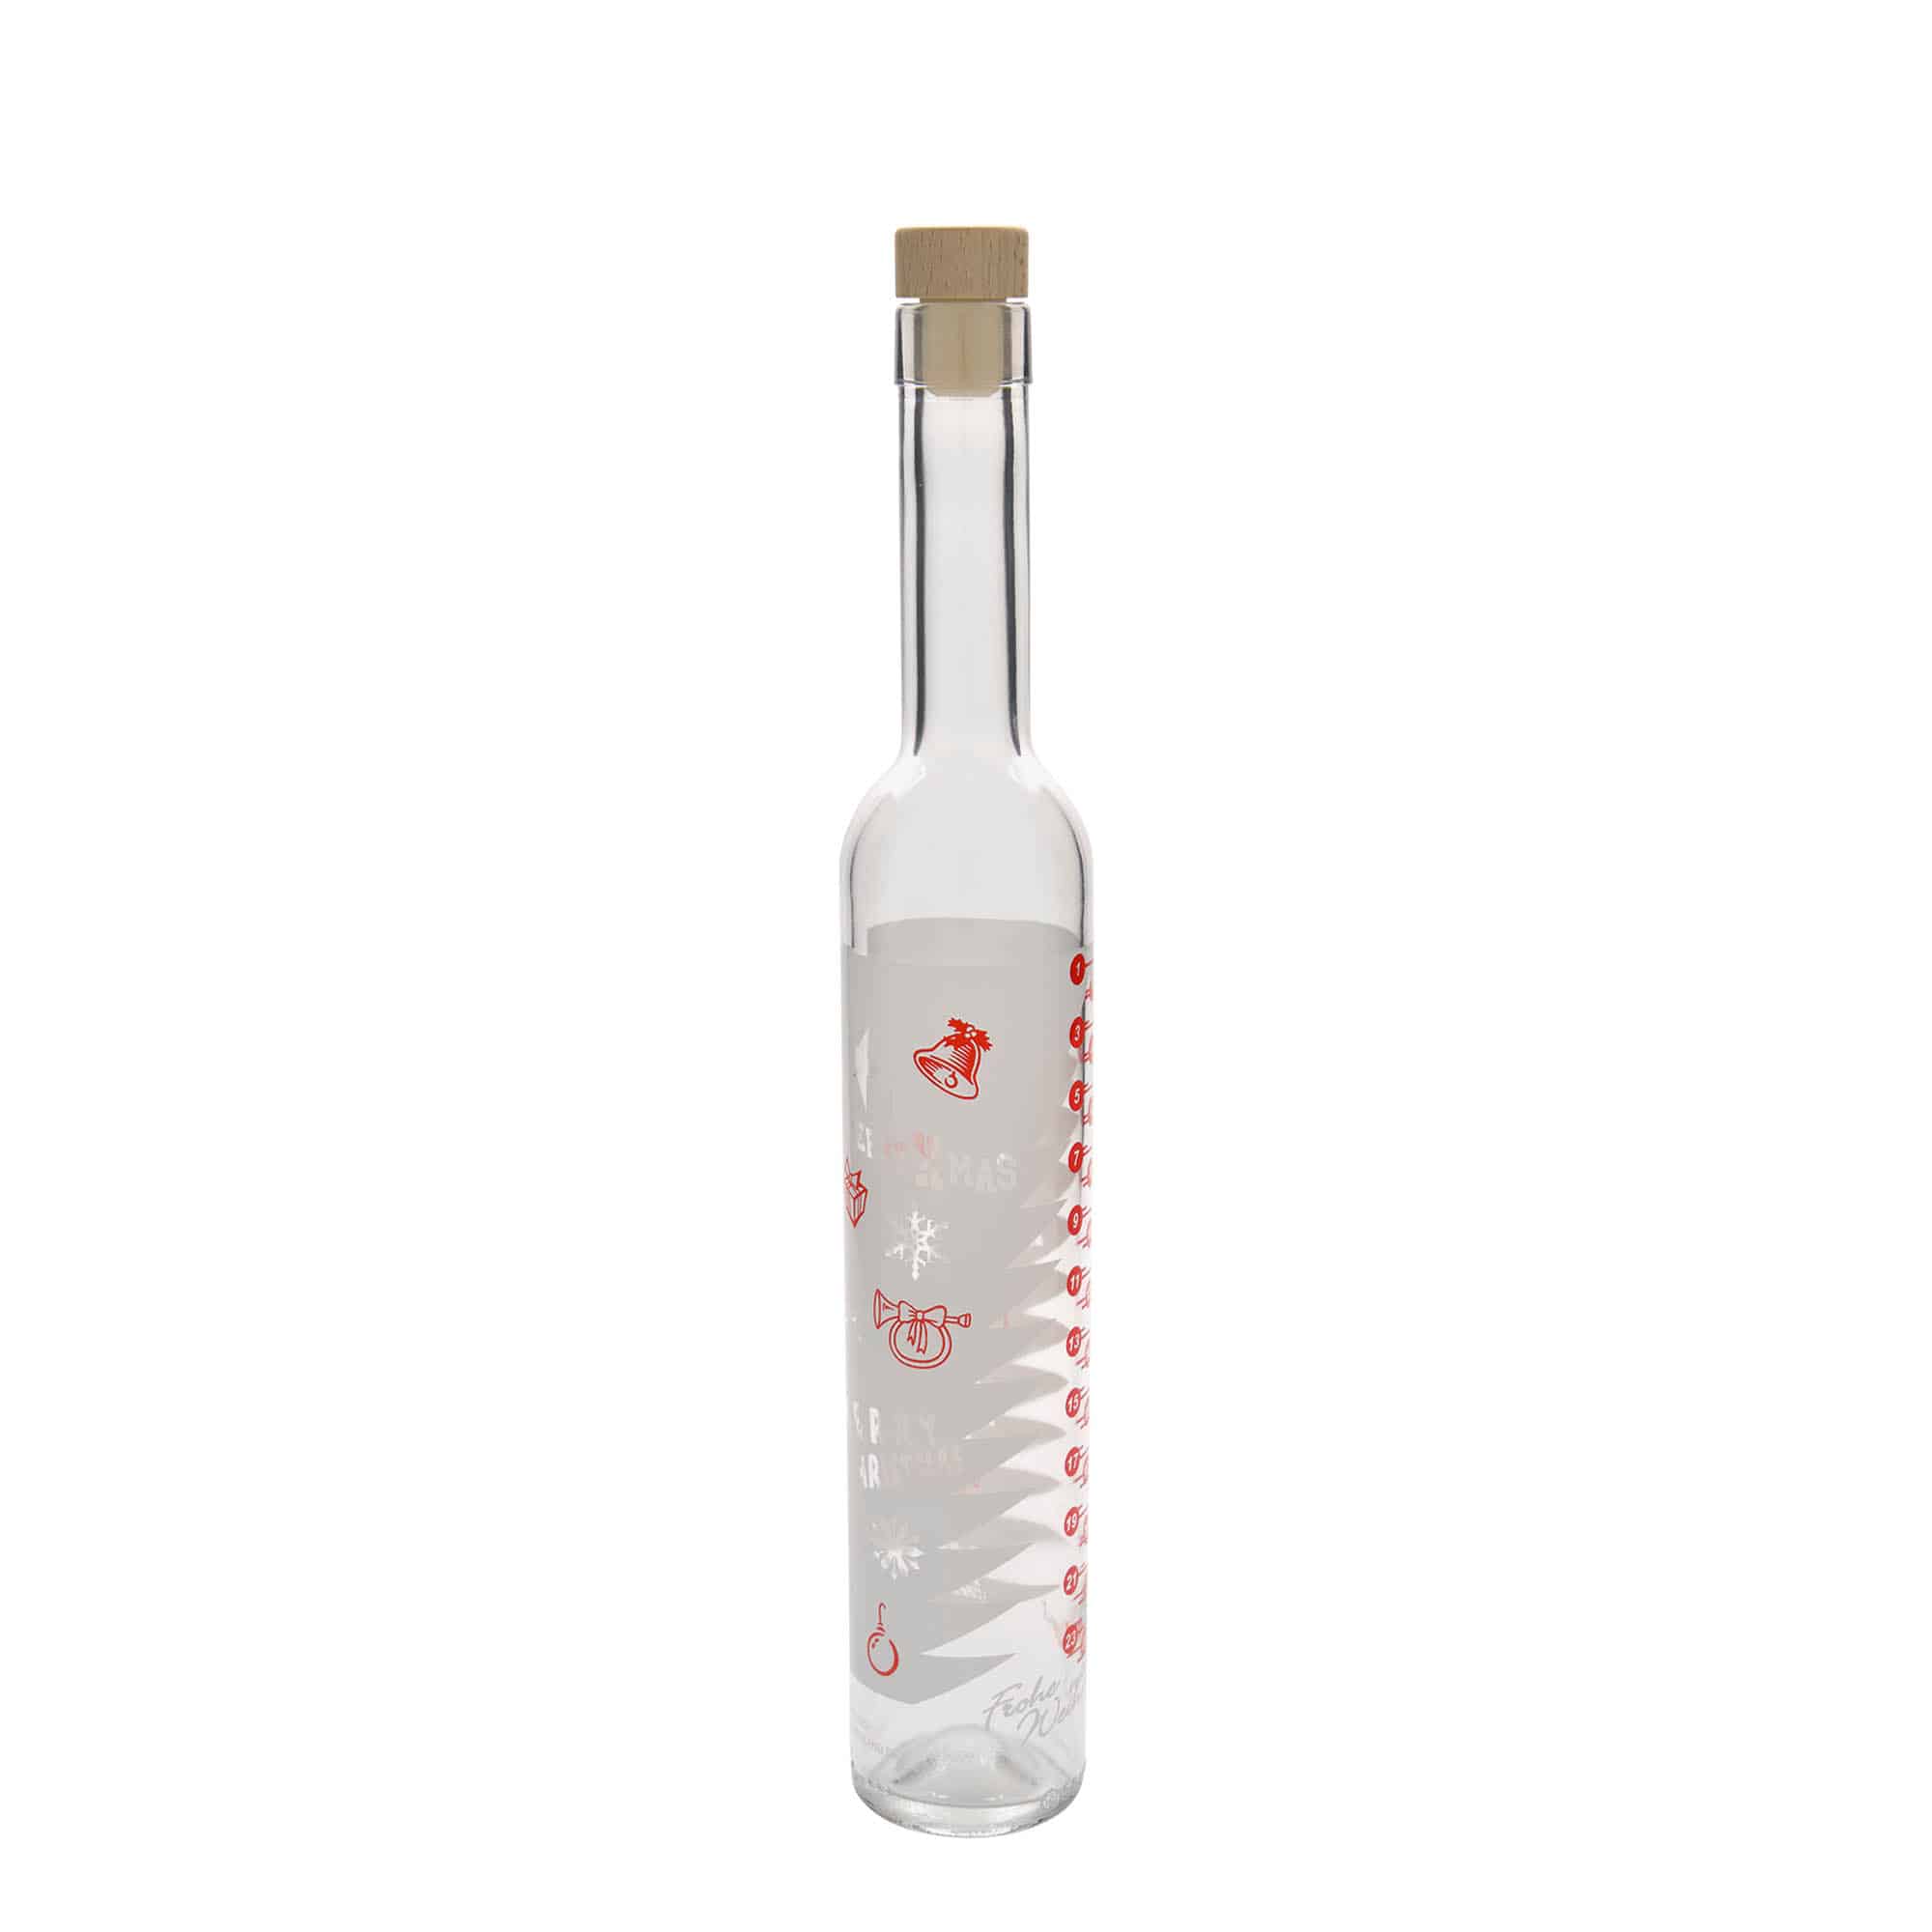 500 ml glass bottle 'Maximo', print: 'Advent Calendar', closure: cork